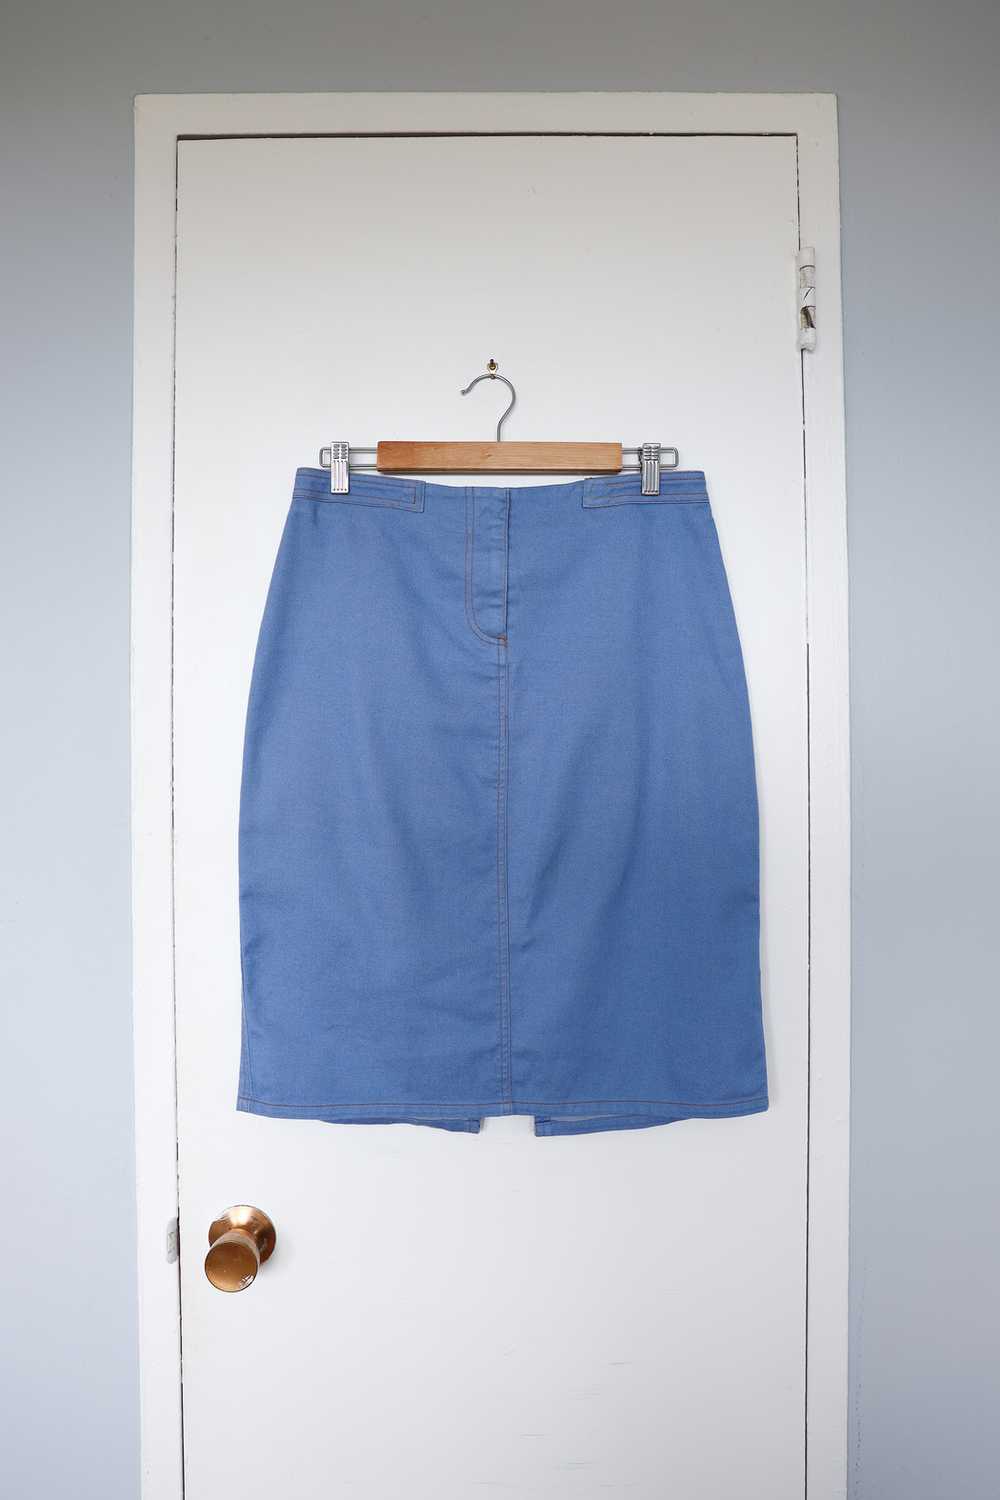 Cornflower Blue Pencil Skirt / Size 8 - image 6